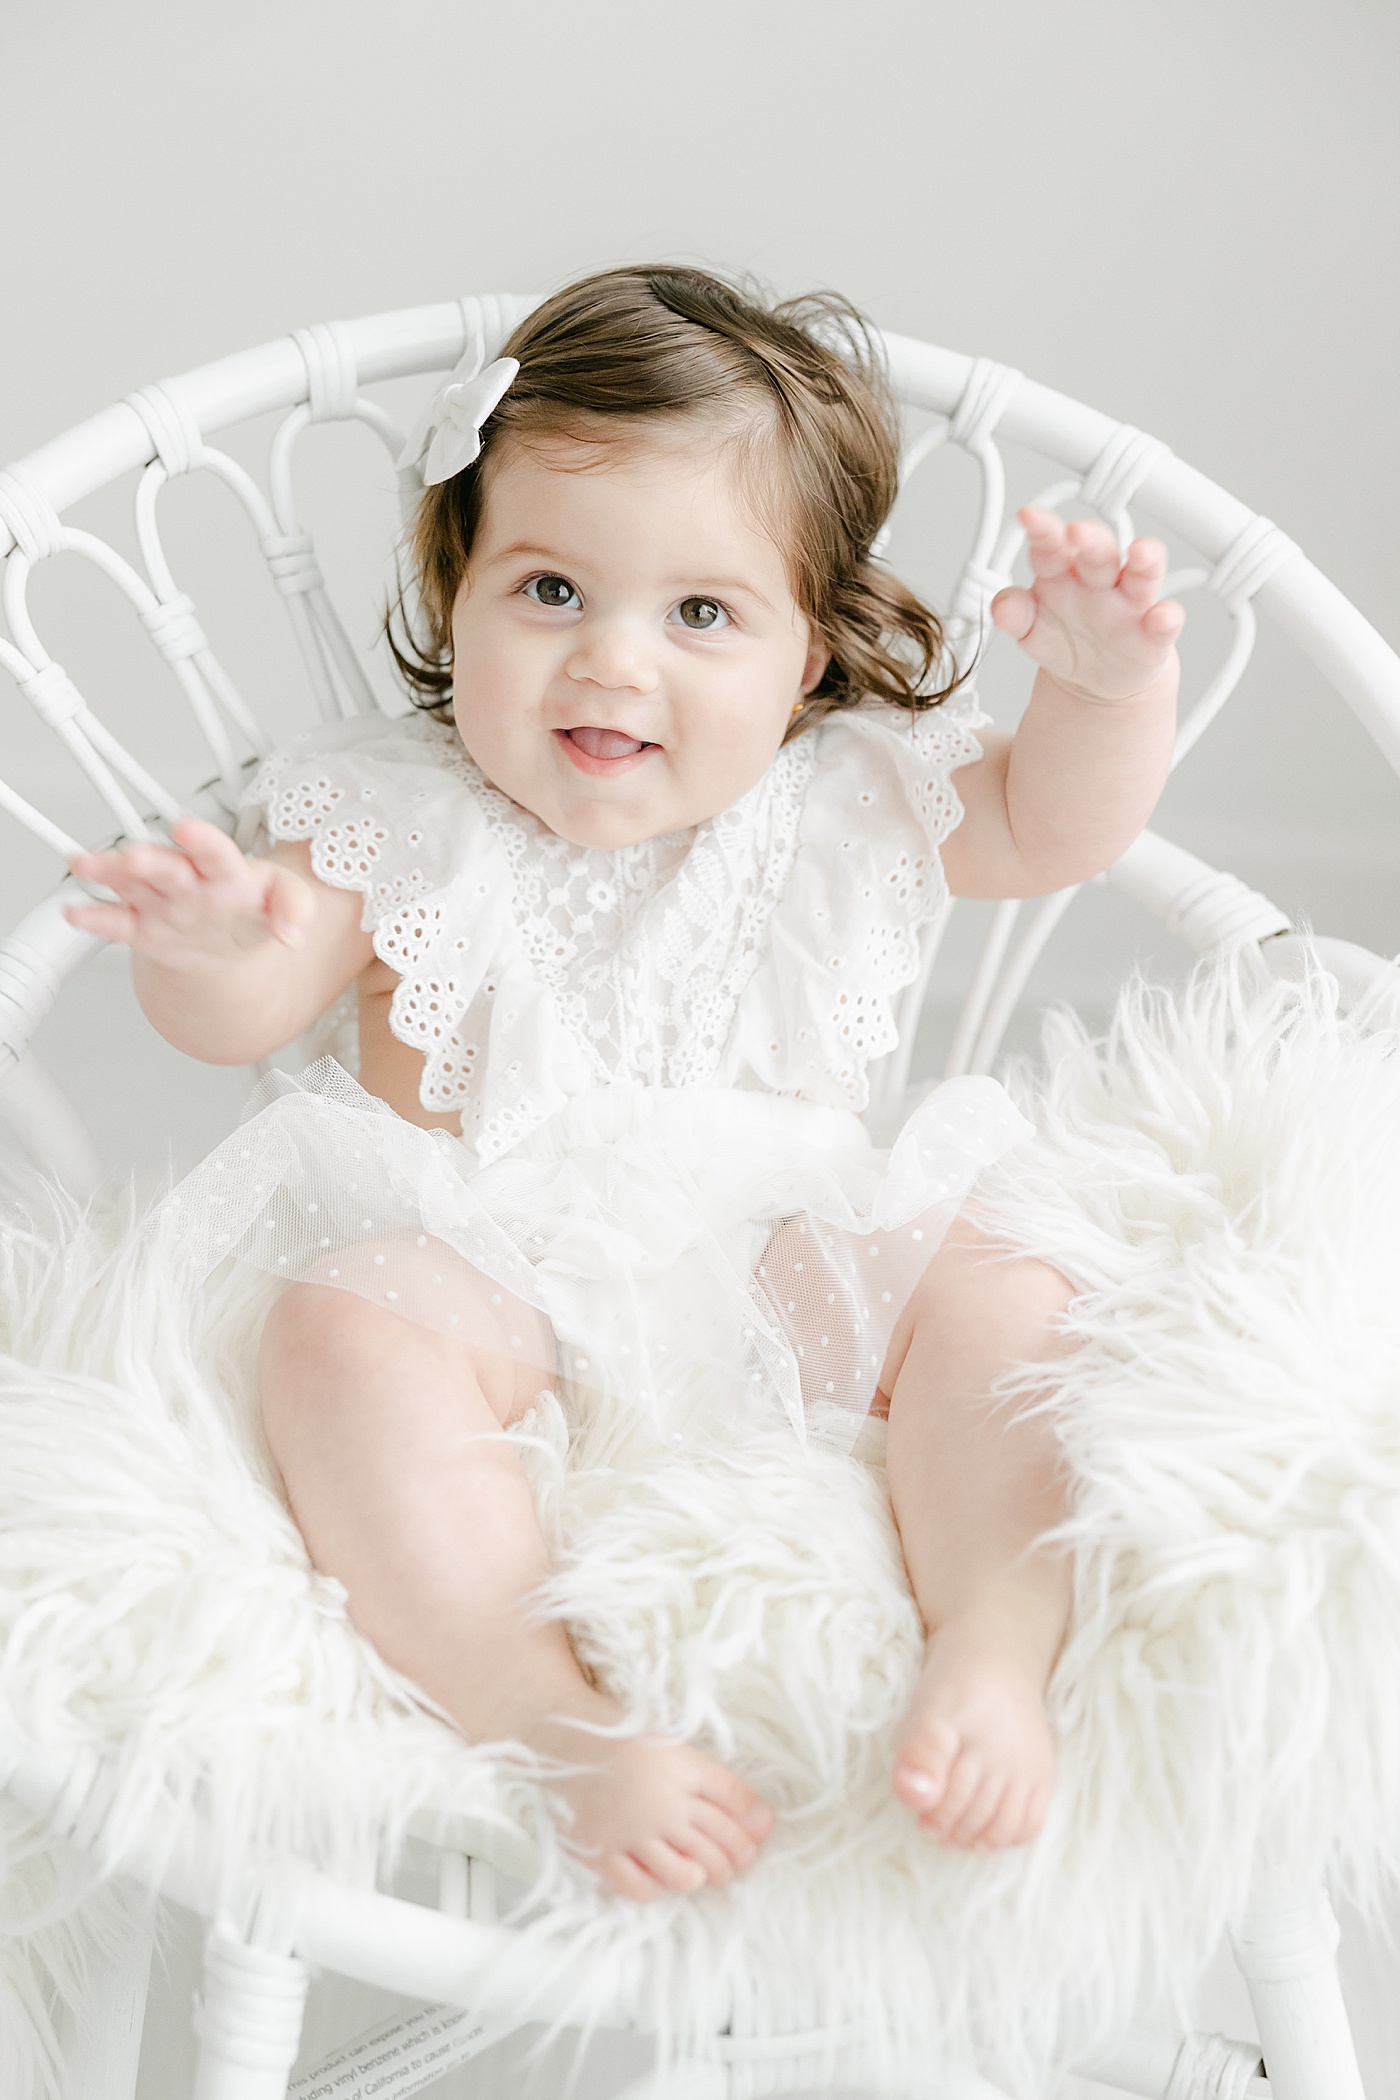 6 month milestone photoshoot for baby girl | Kristin Wood Photography